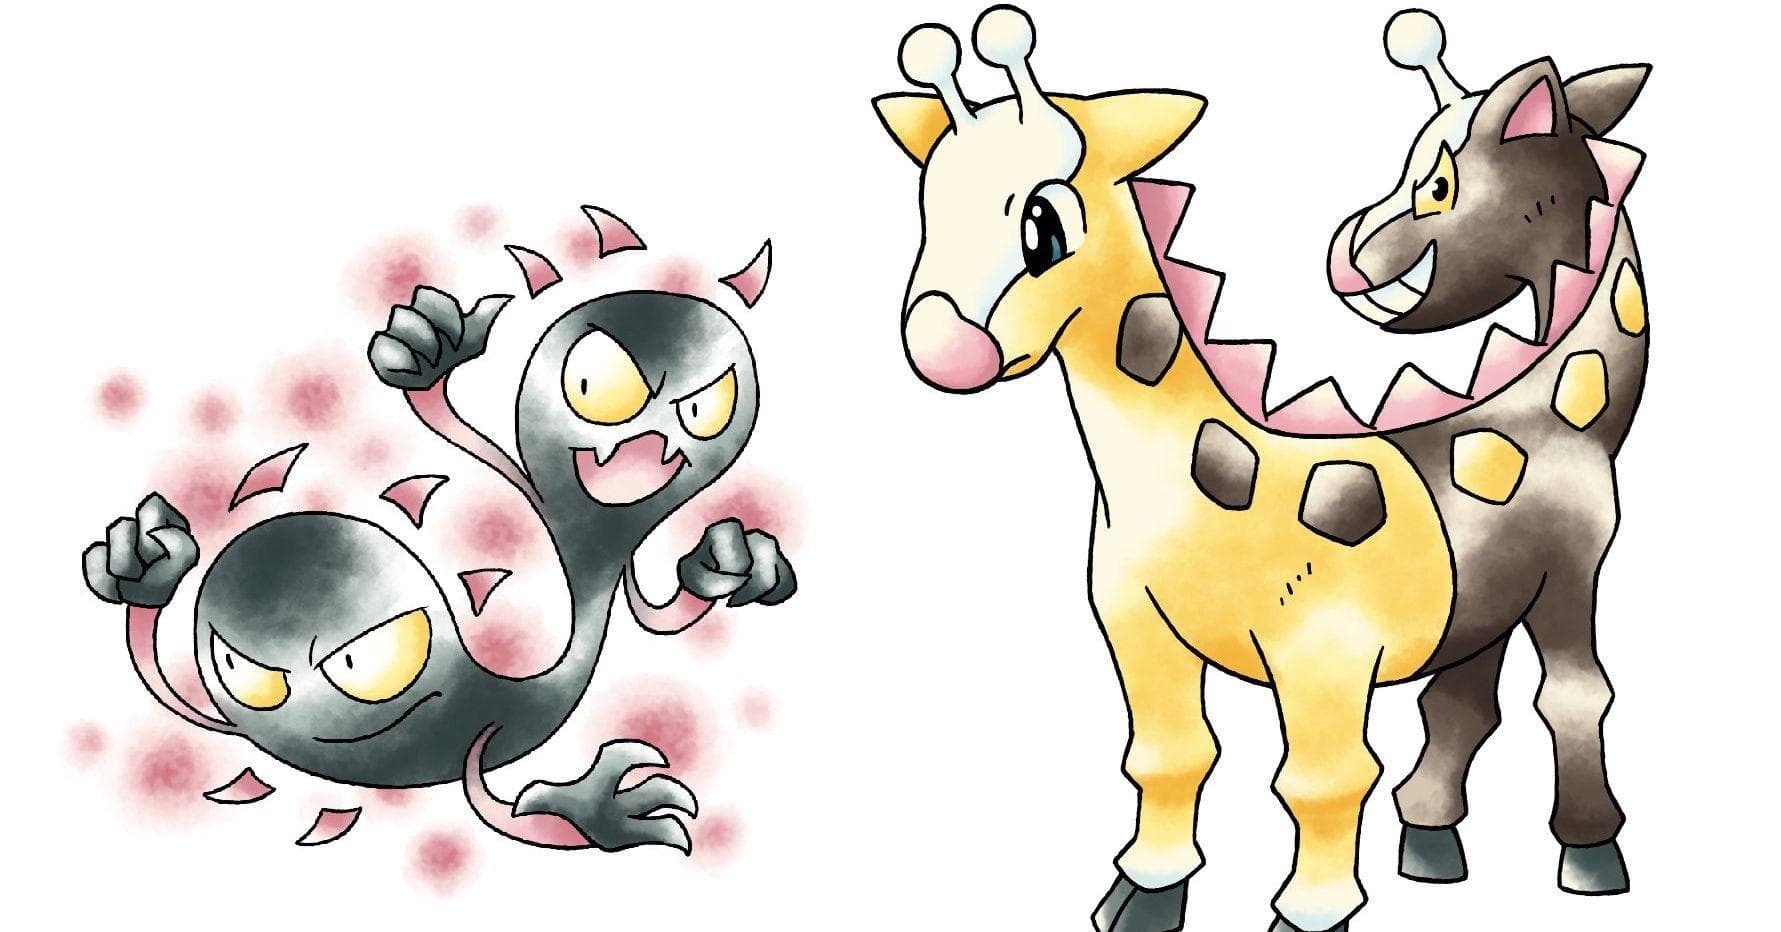 Starter Sprite Differences Between Pokemon Black/White and Pokemon